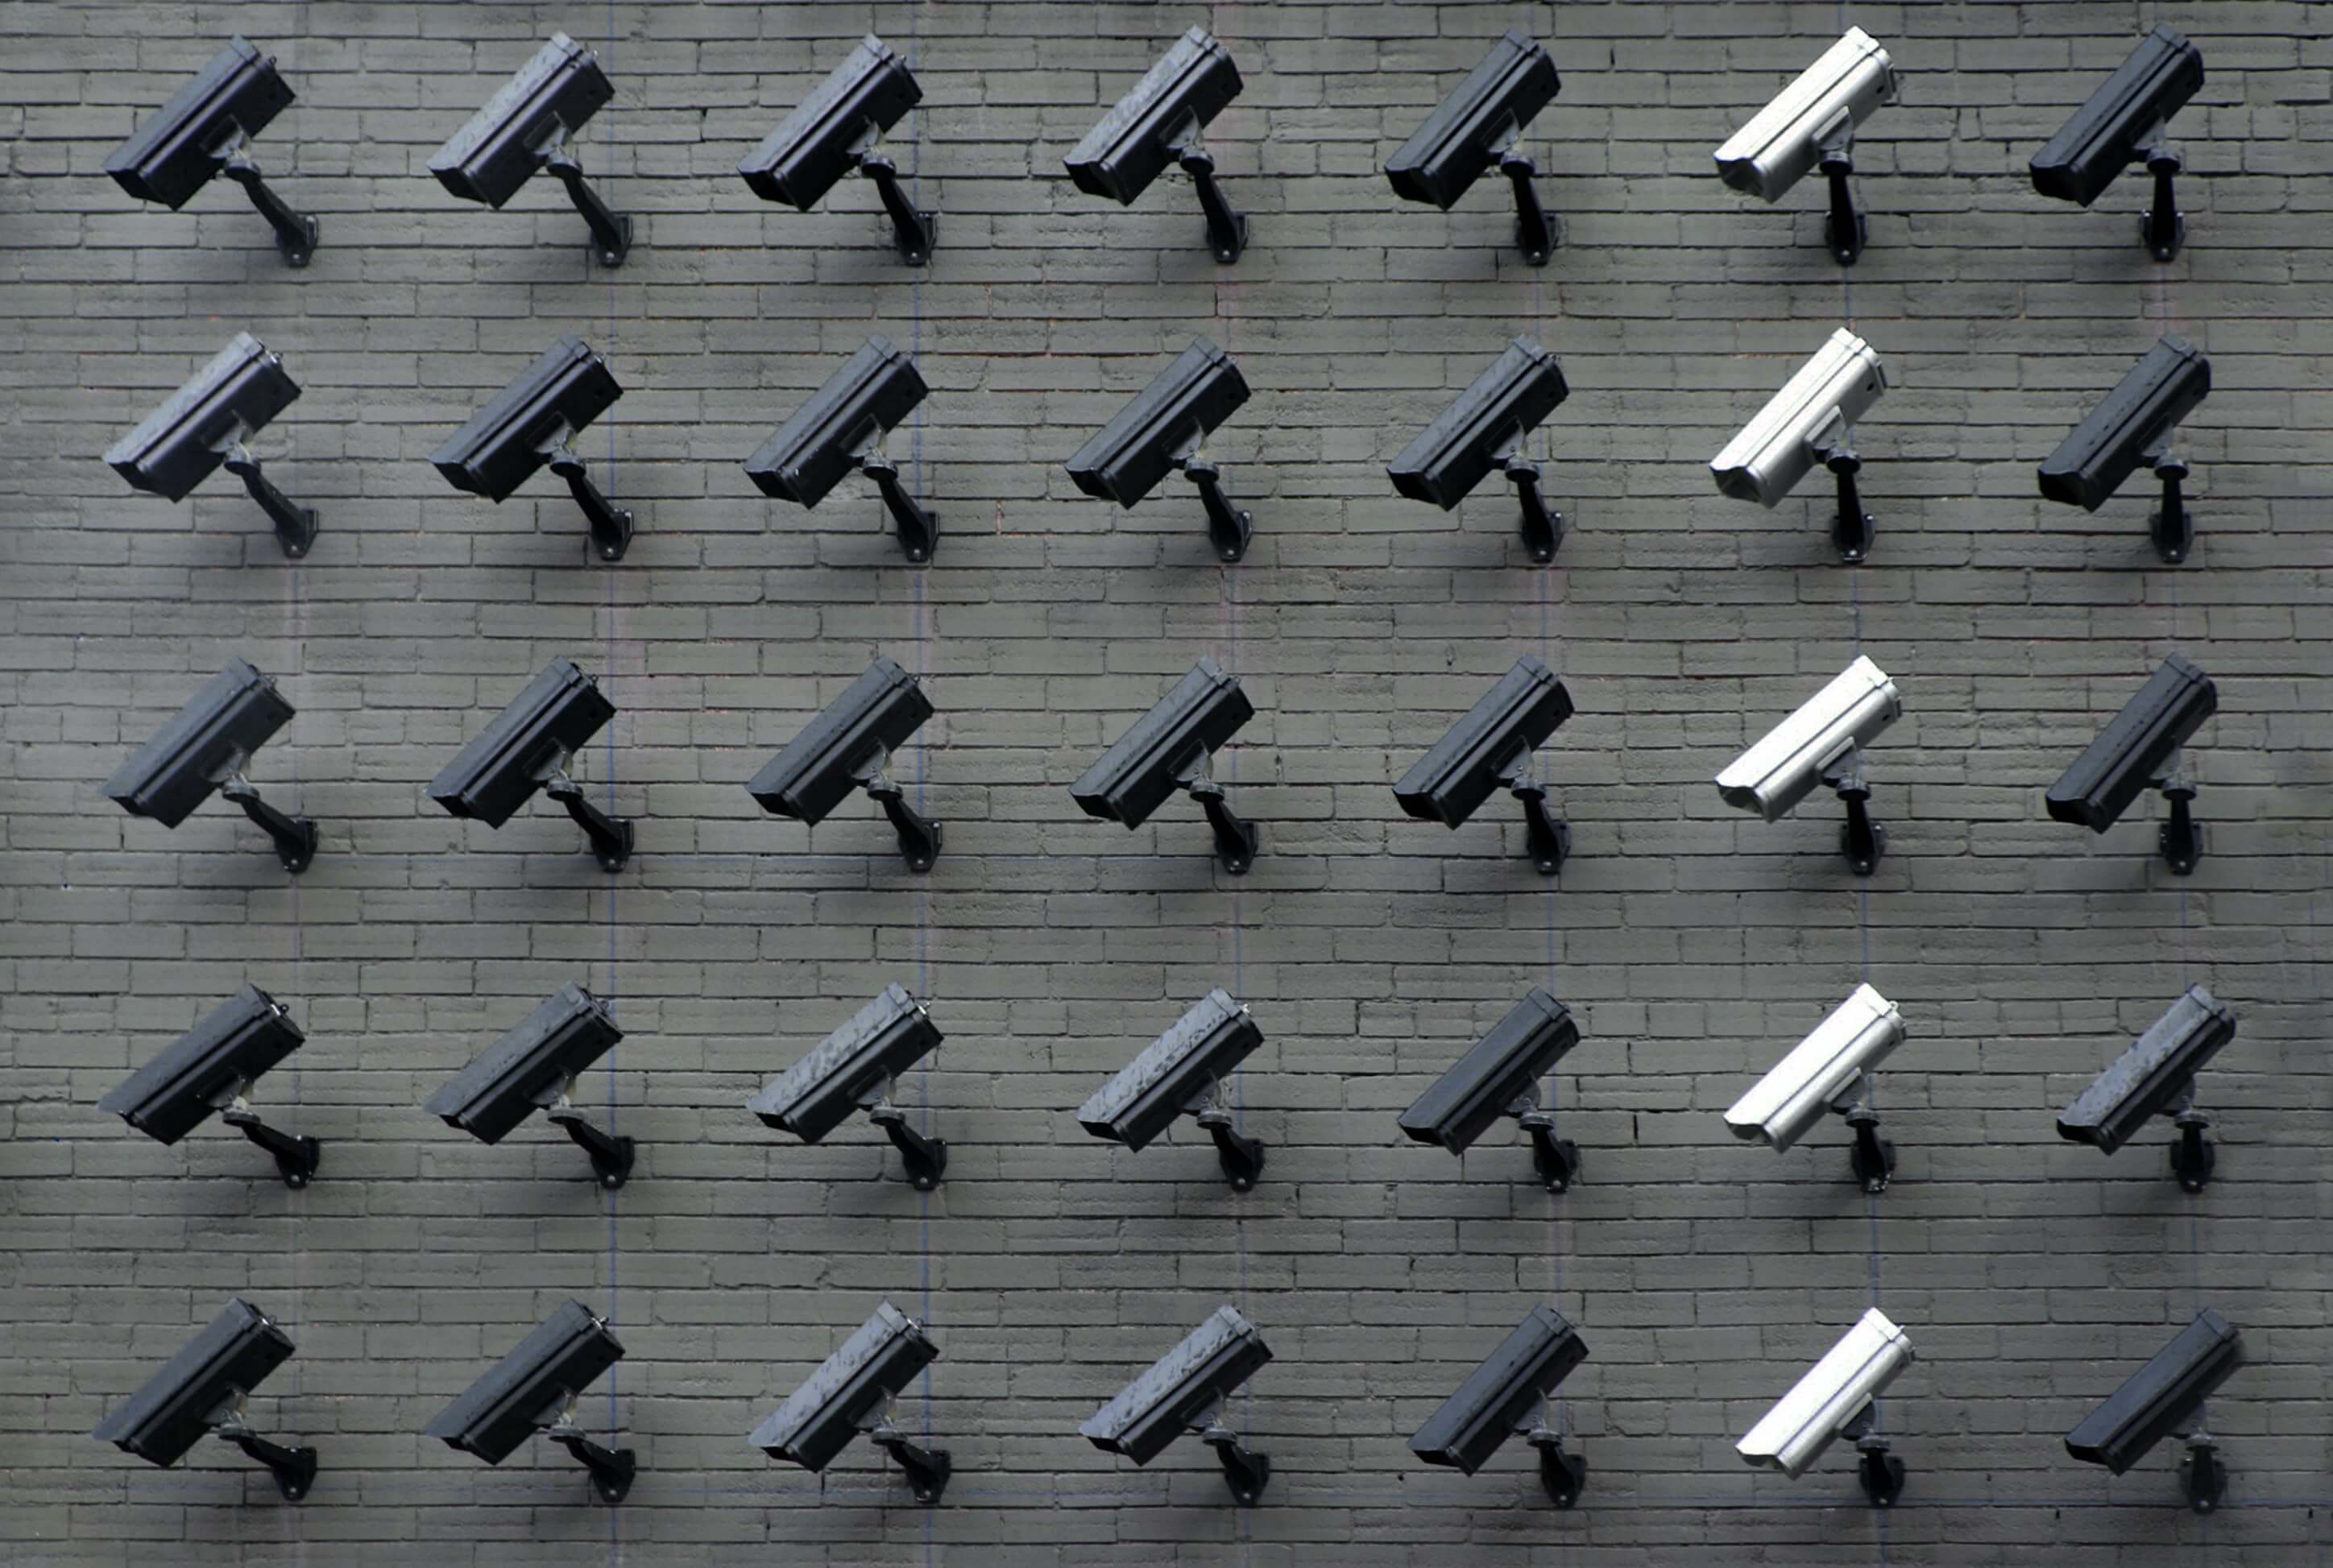 Several rows of security cameras